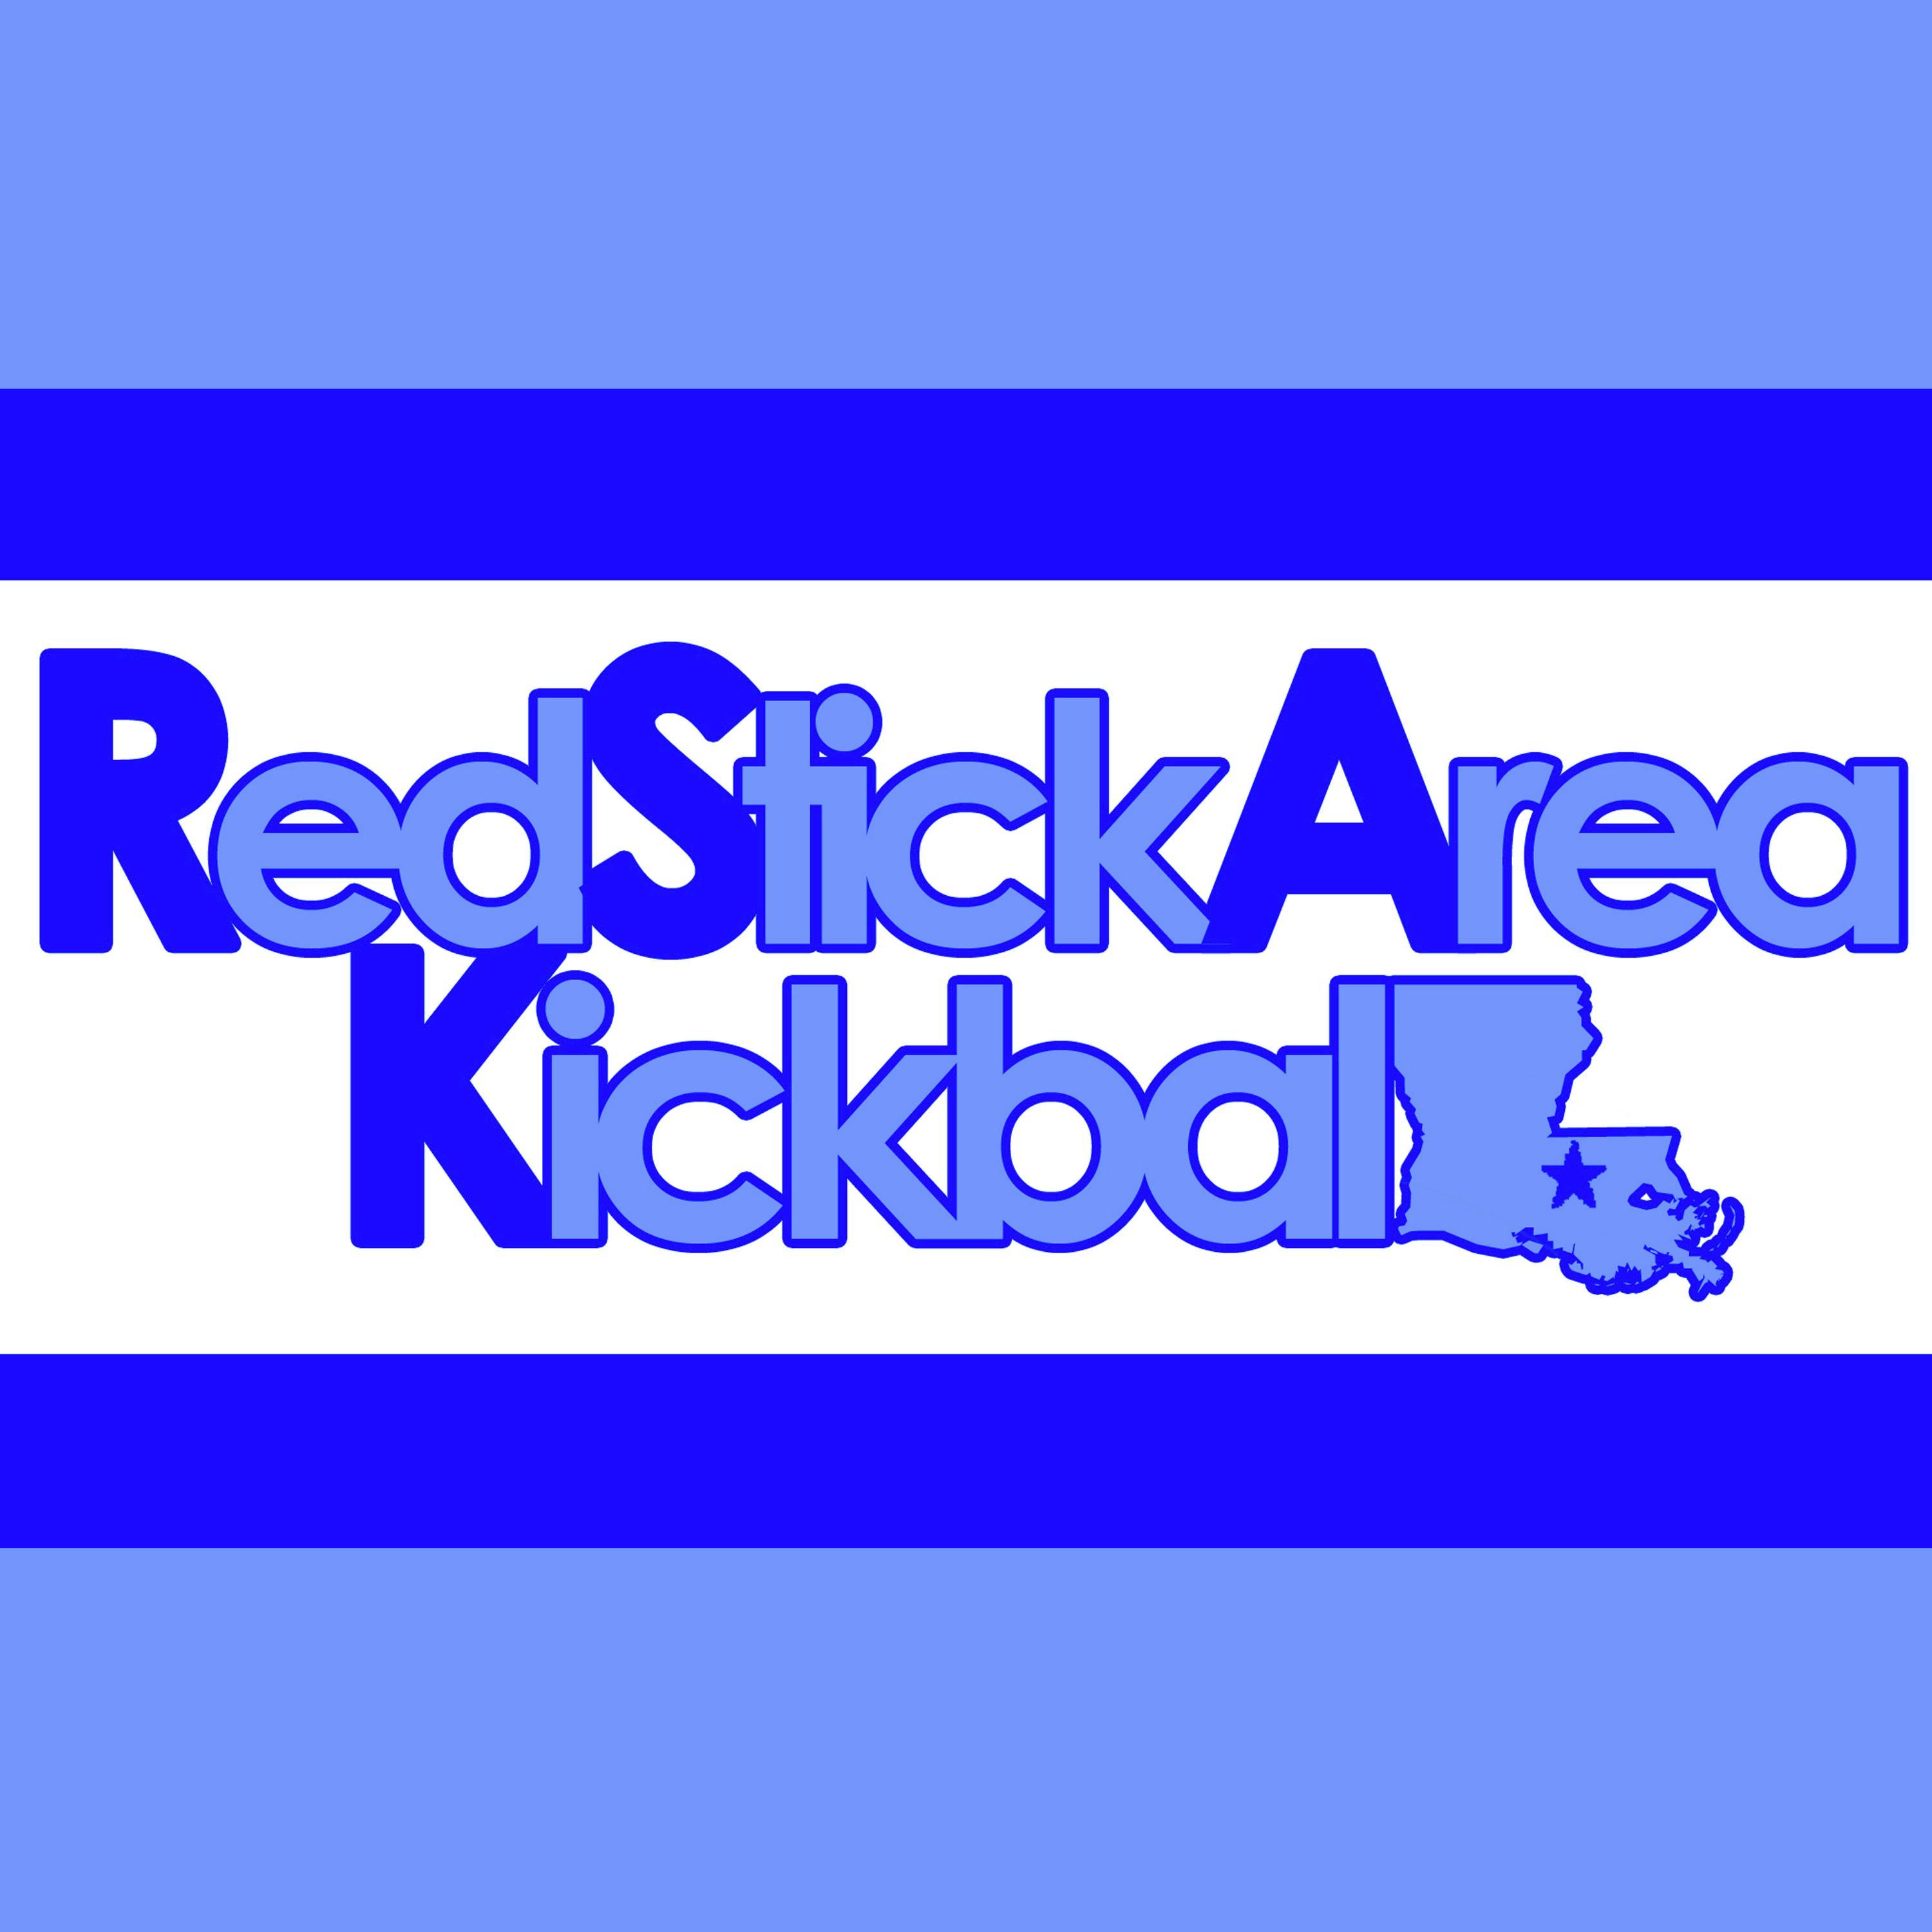 Red Stick Area Kickball: Meet People, Play Kickball, Have Fun!